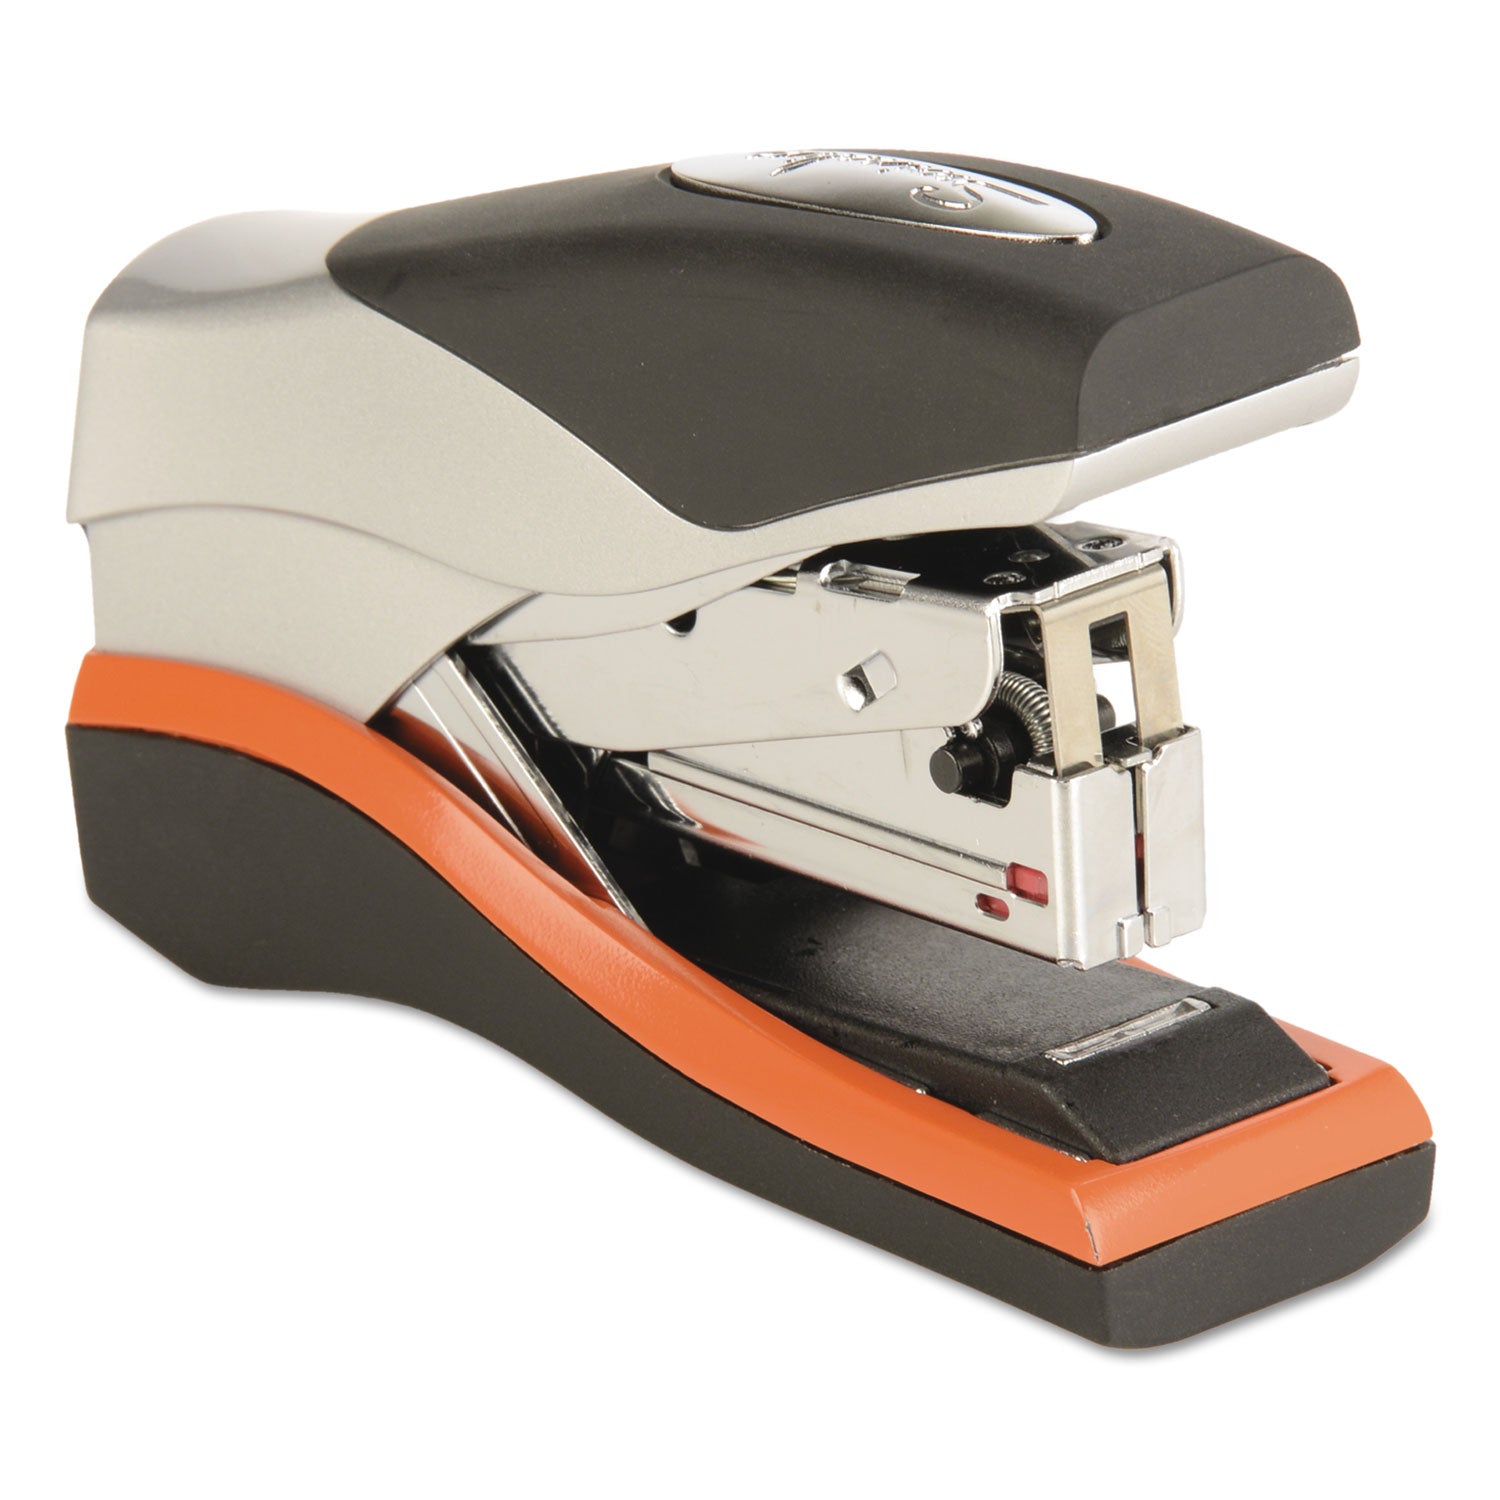 optima-40-compact-stapler-40-sheet-capacity-black-silver-orange_swi87842 - 3